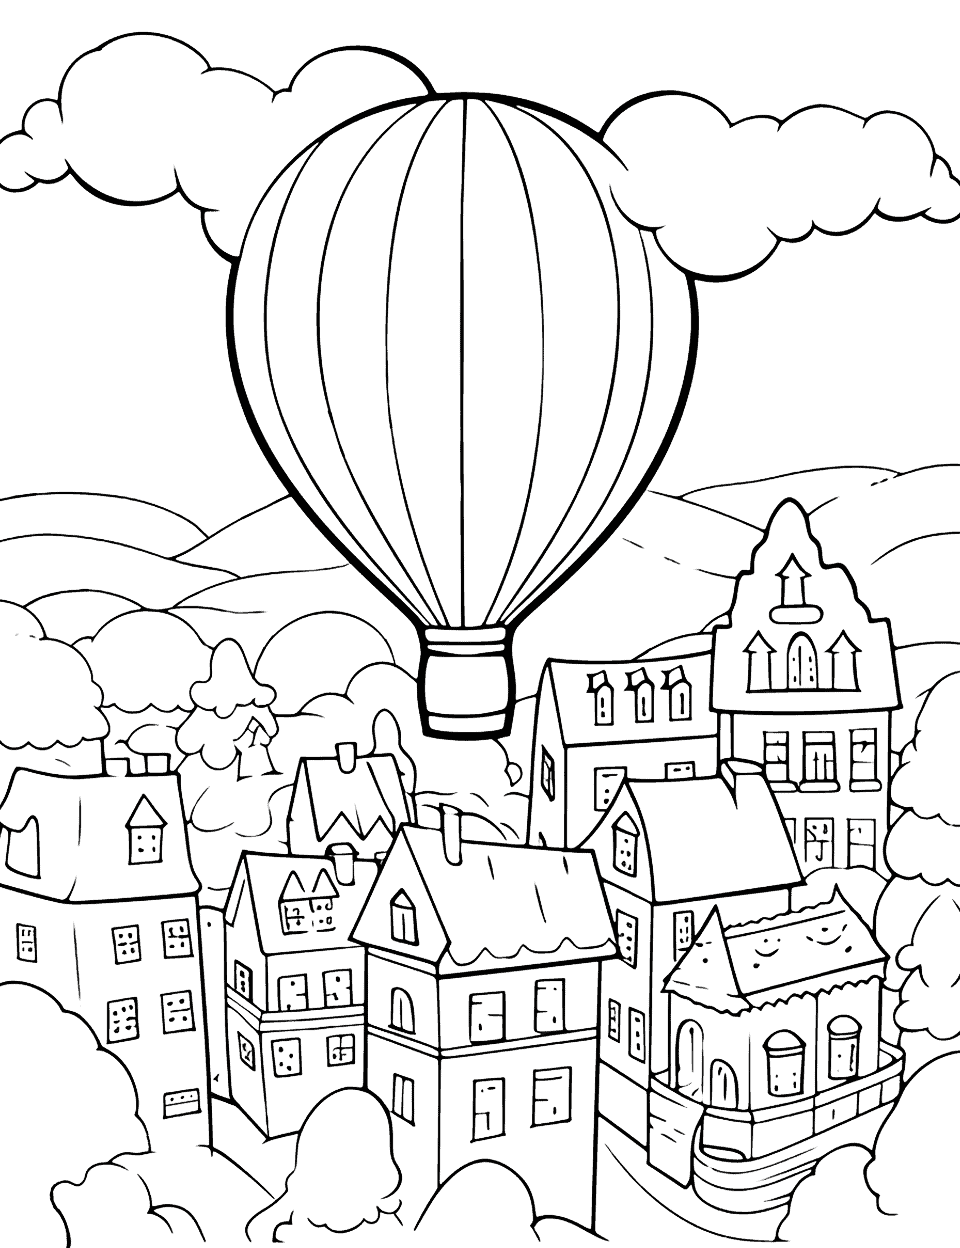 Festive Hot Air Balloon Christmas Coloring Page - A festive hot air balloon floating over a snowy town.